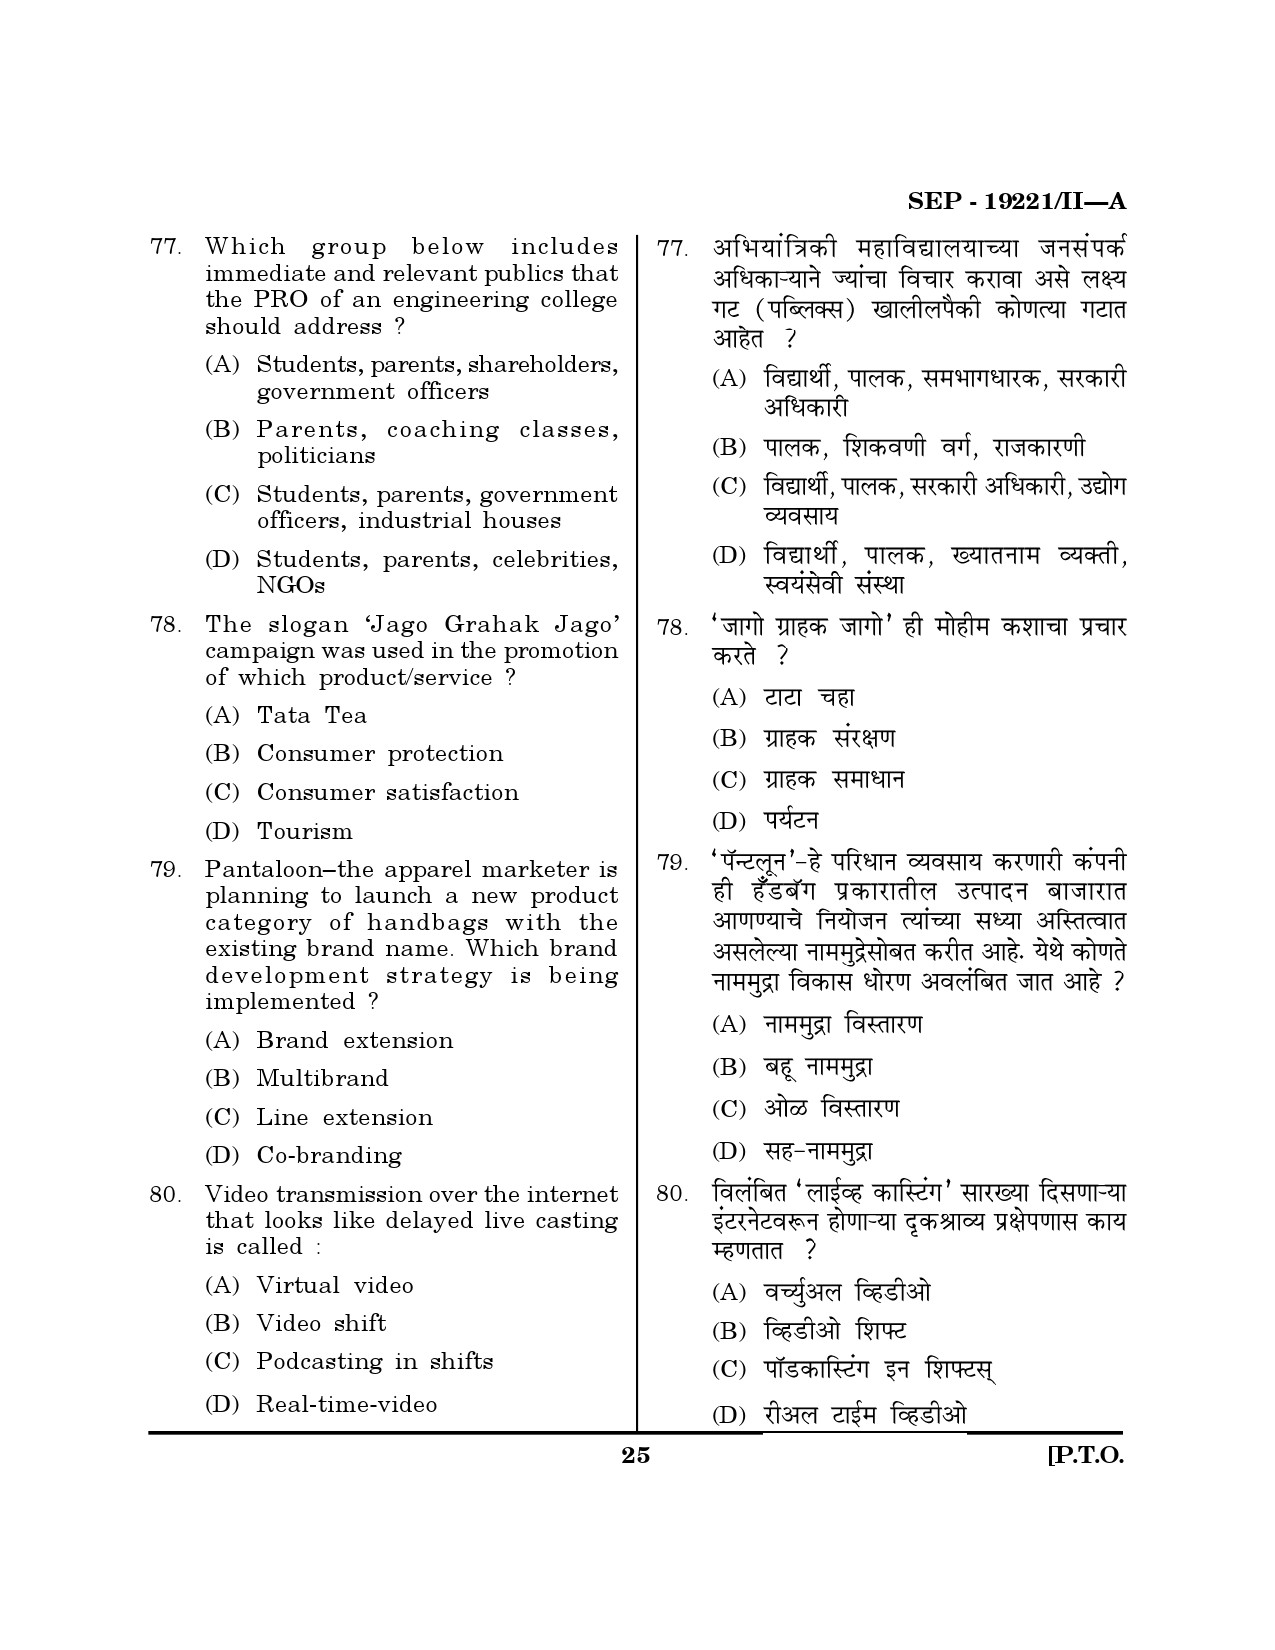 Maharashtra SET Journalism and Mass Communication Exam Question Paper September 2021 24